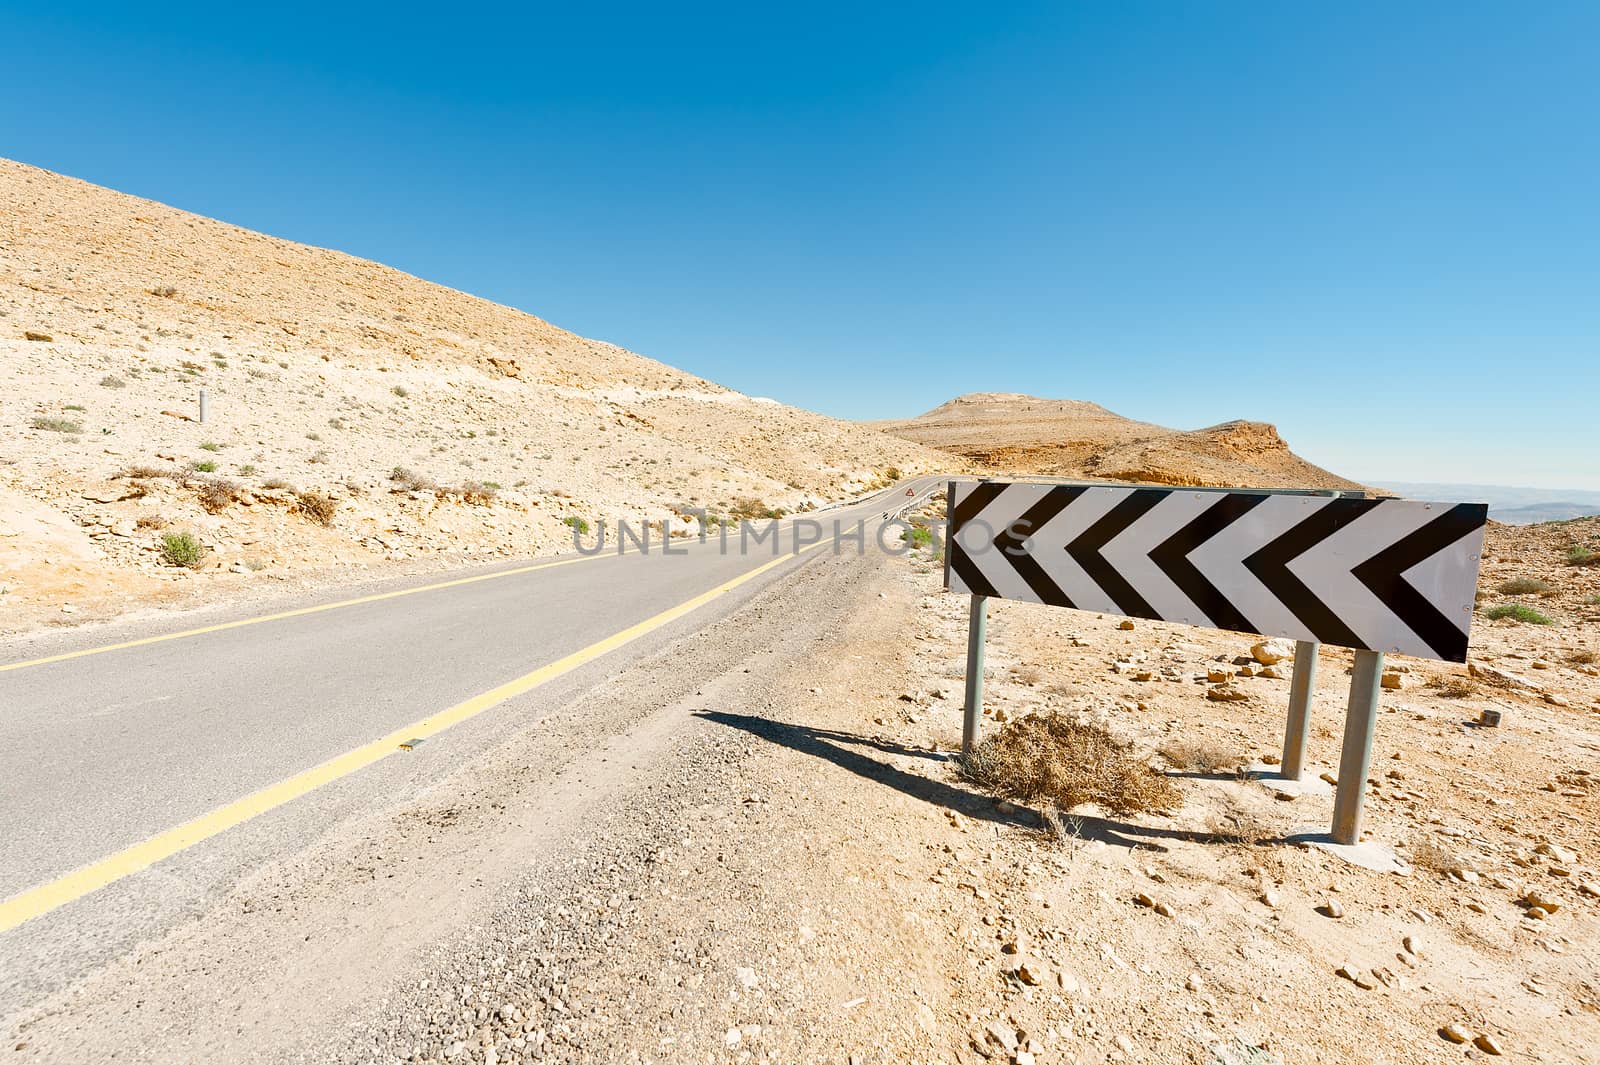 Asphalt Road in the Negev Desert in Israel